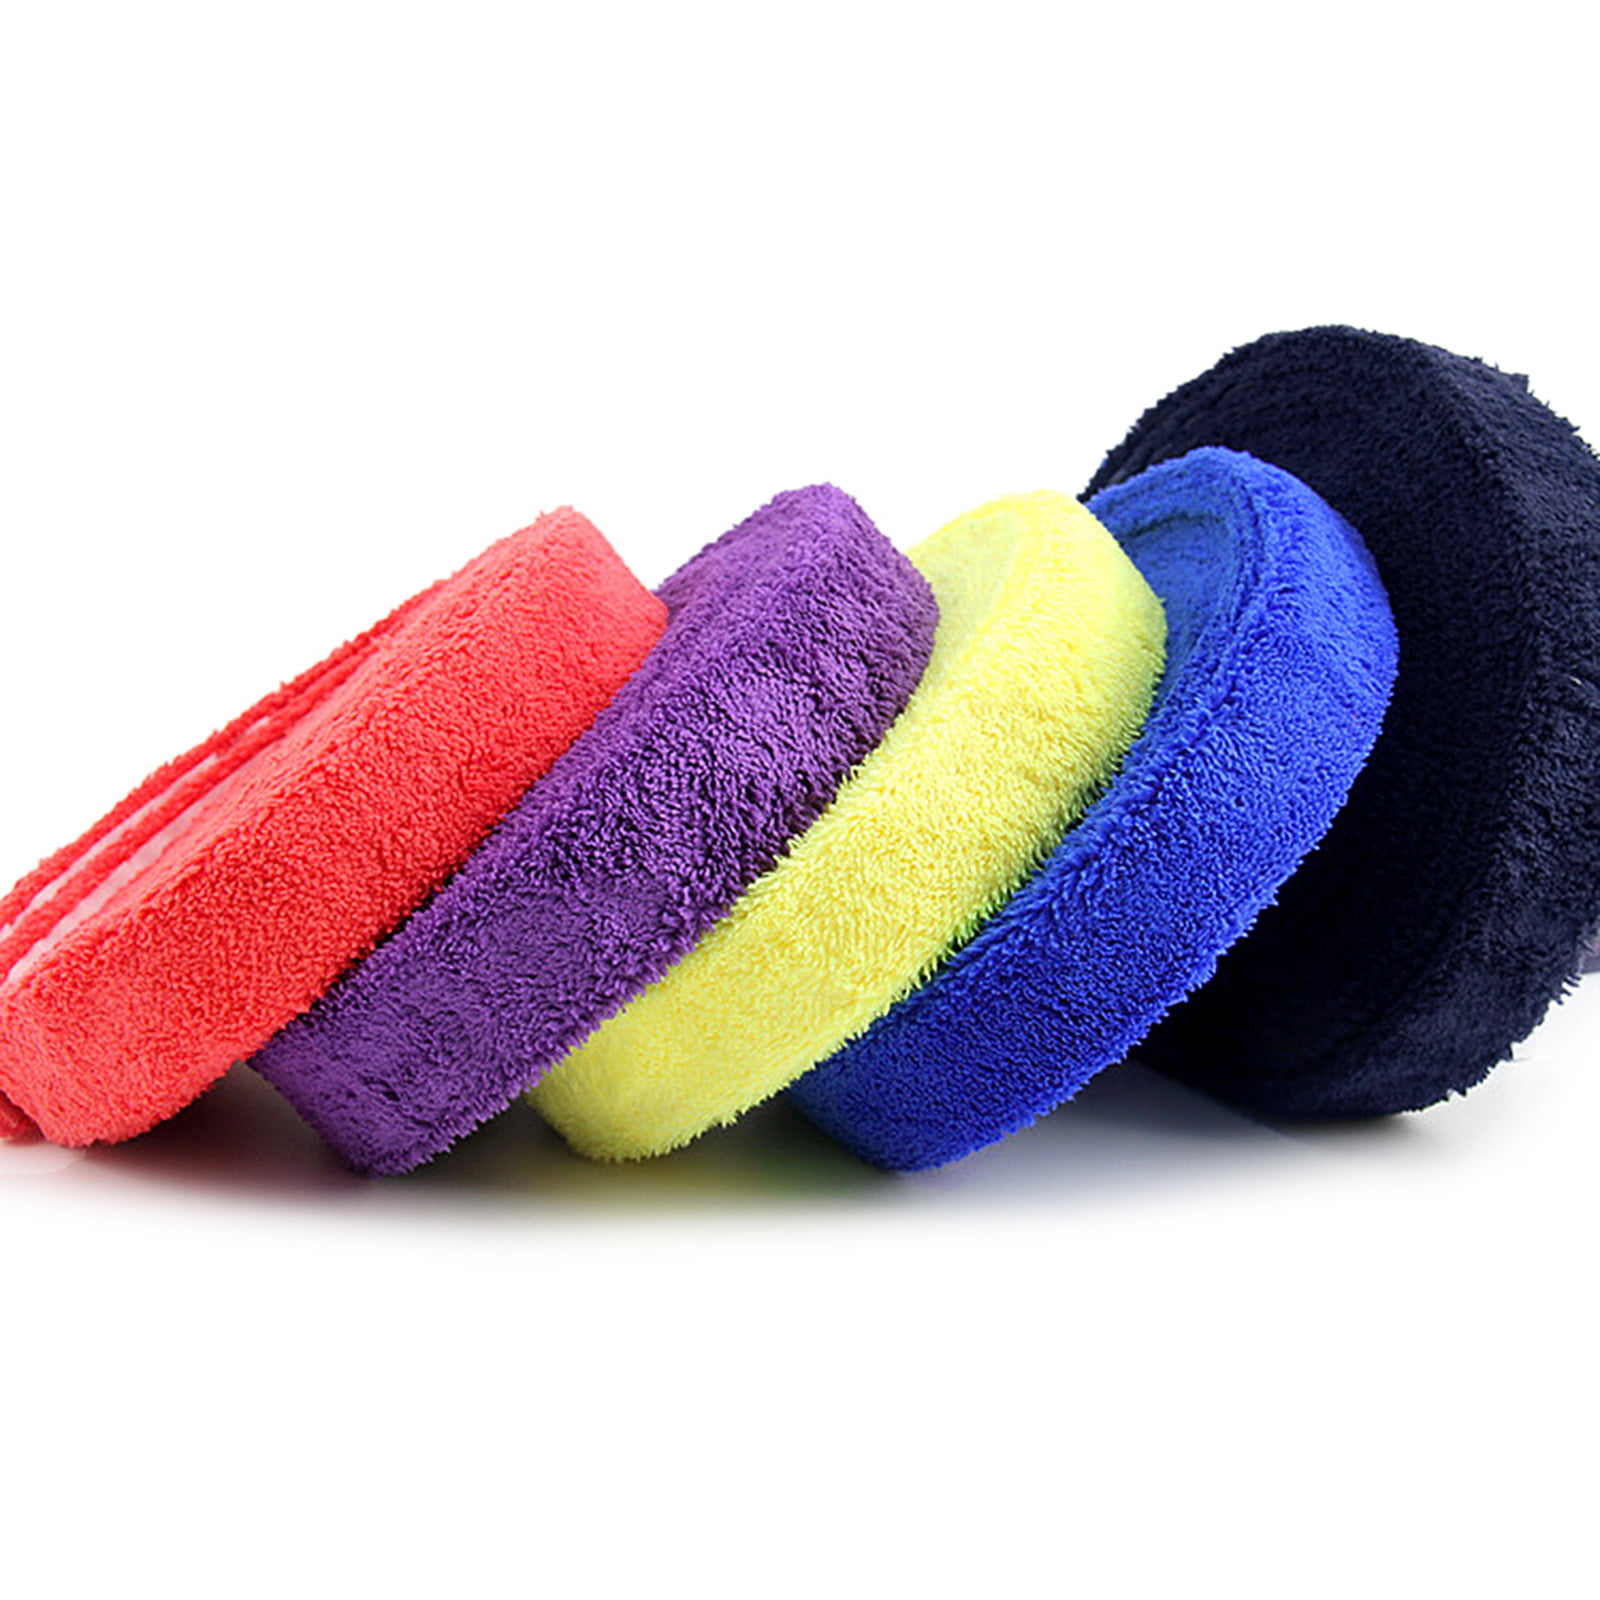 1 Reel 10M Towel Glue Grip Badminton Tennis Racket Overgrips Non-Slip Sweat Band 